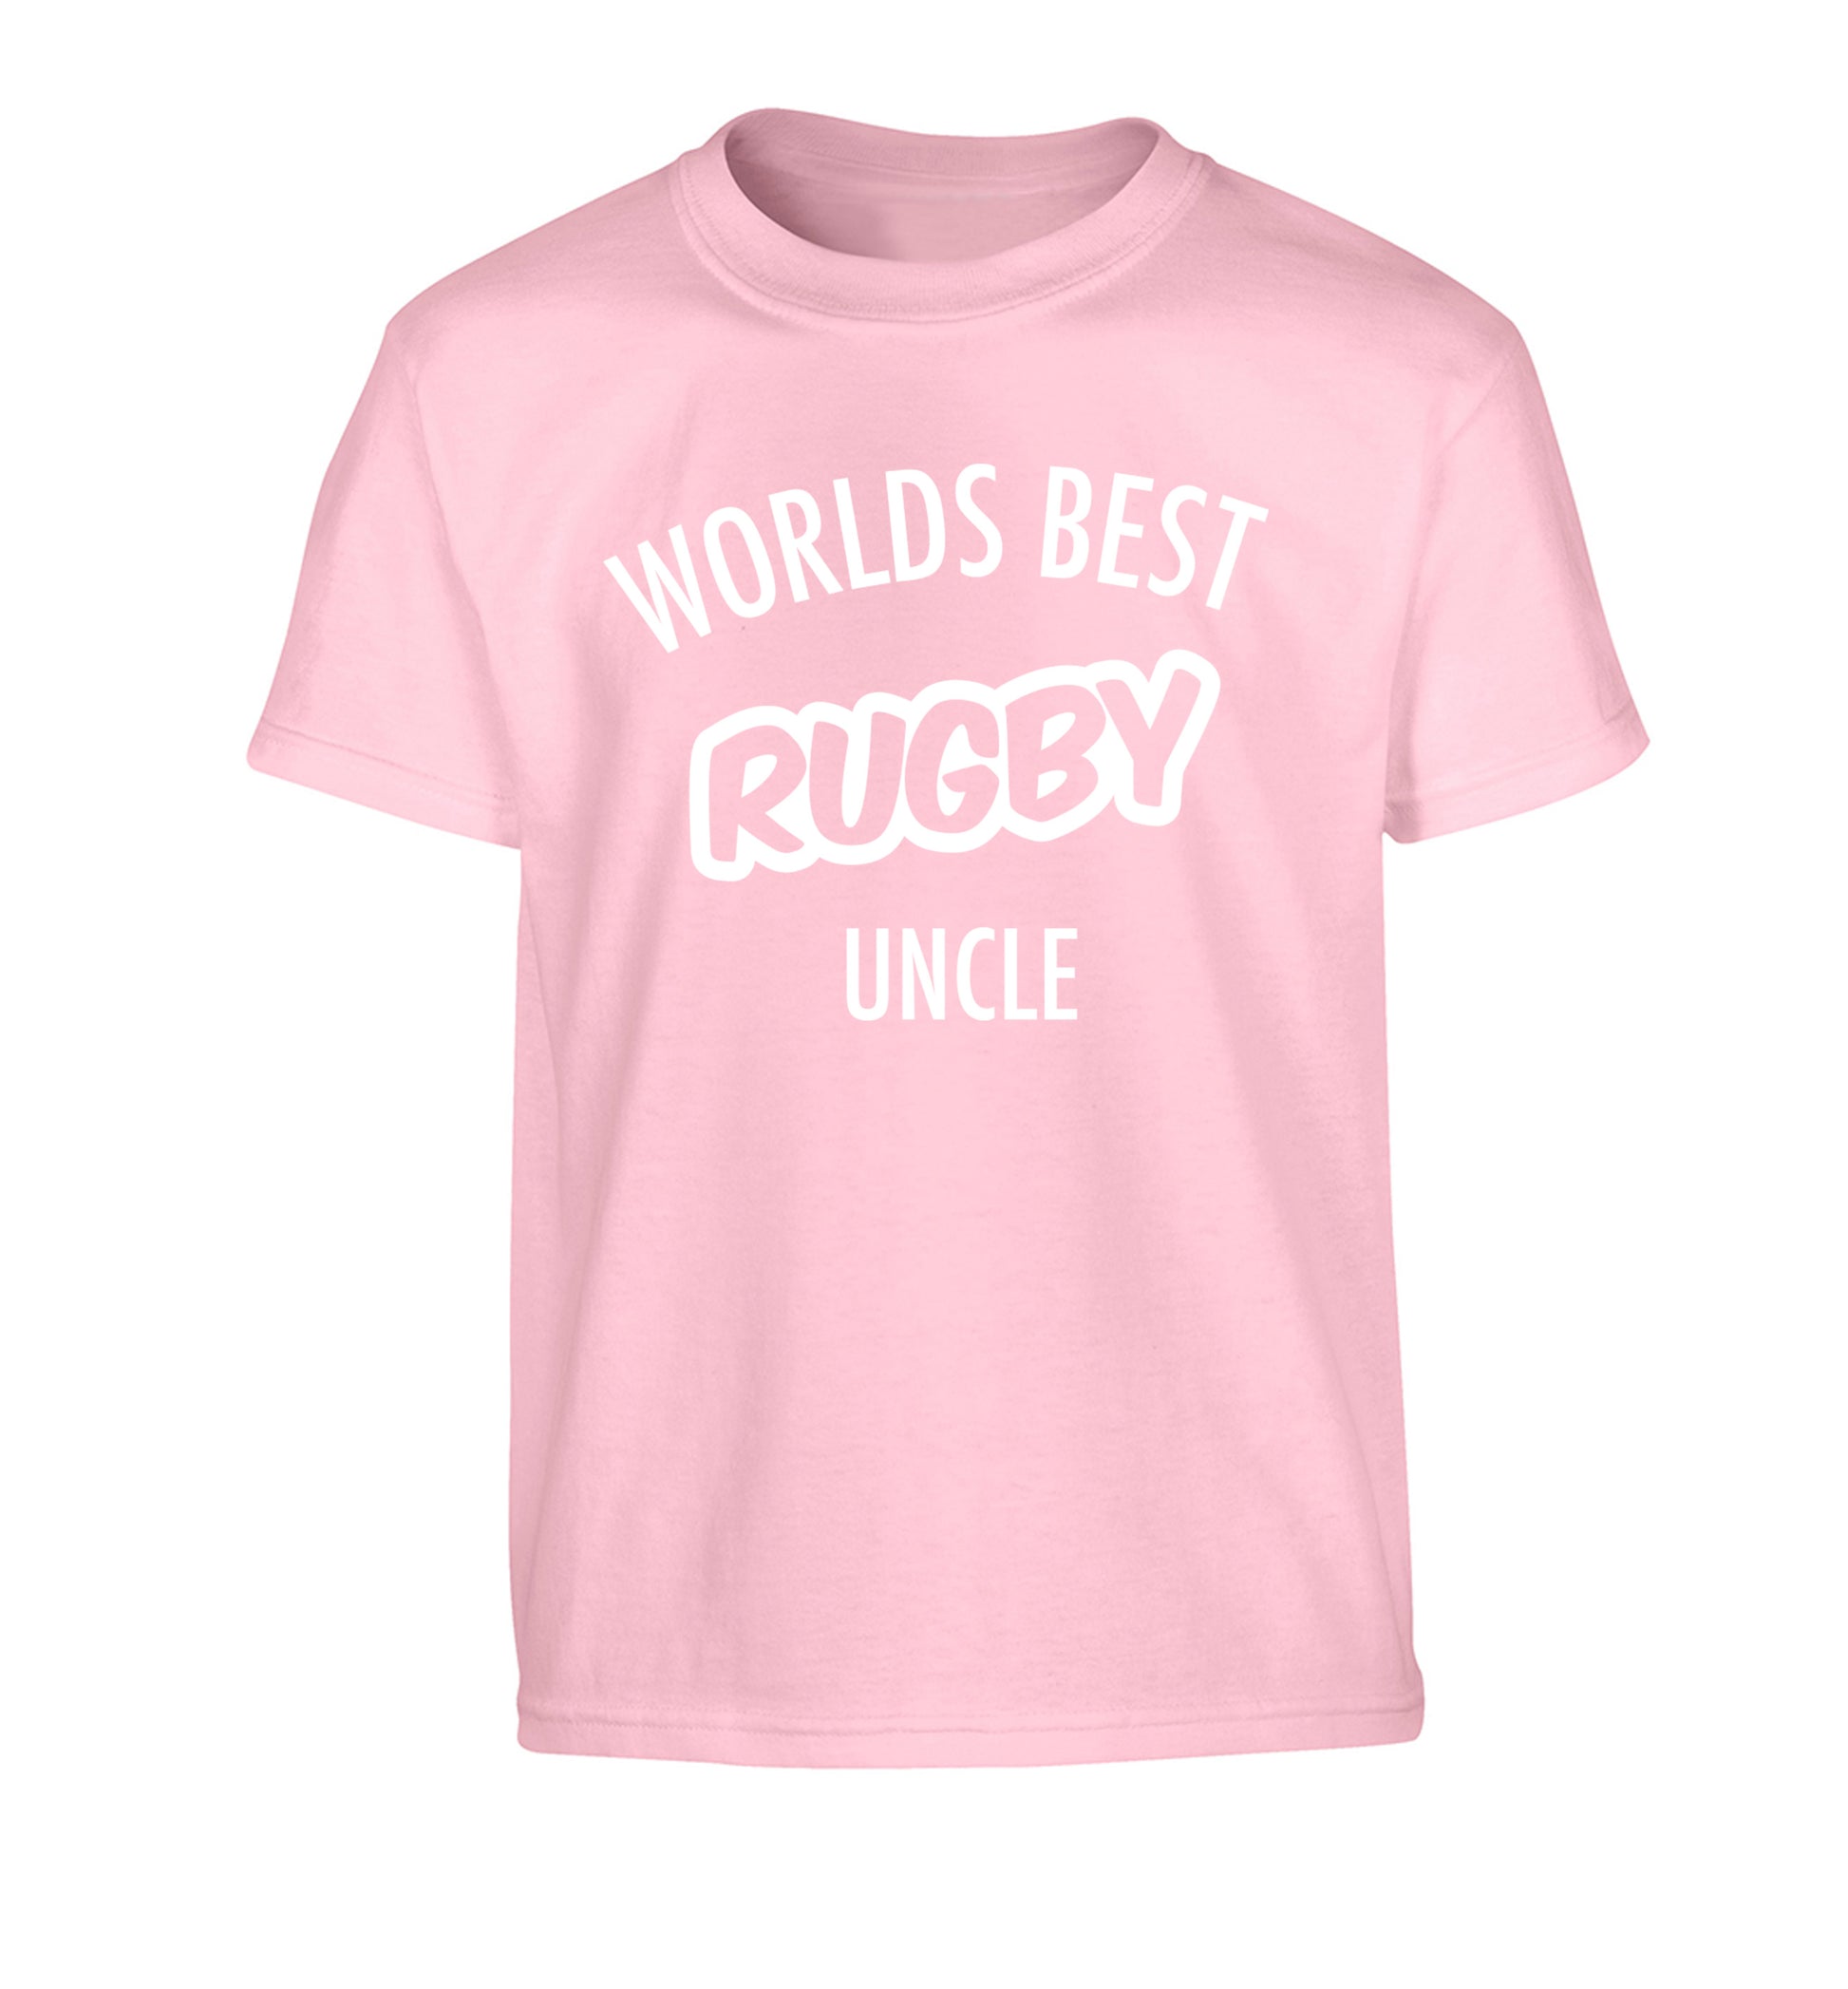 Worlds best rugby uncle Children's light pink Tshirt 12-13 Years